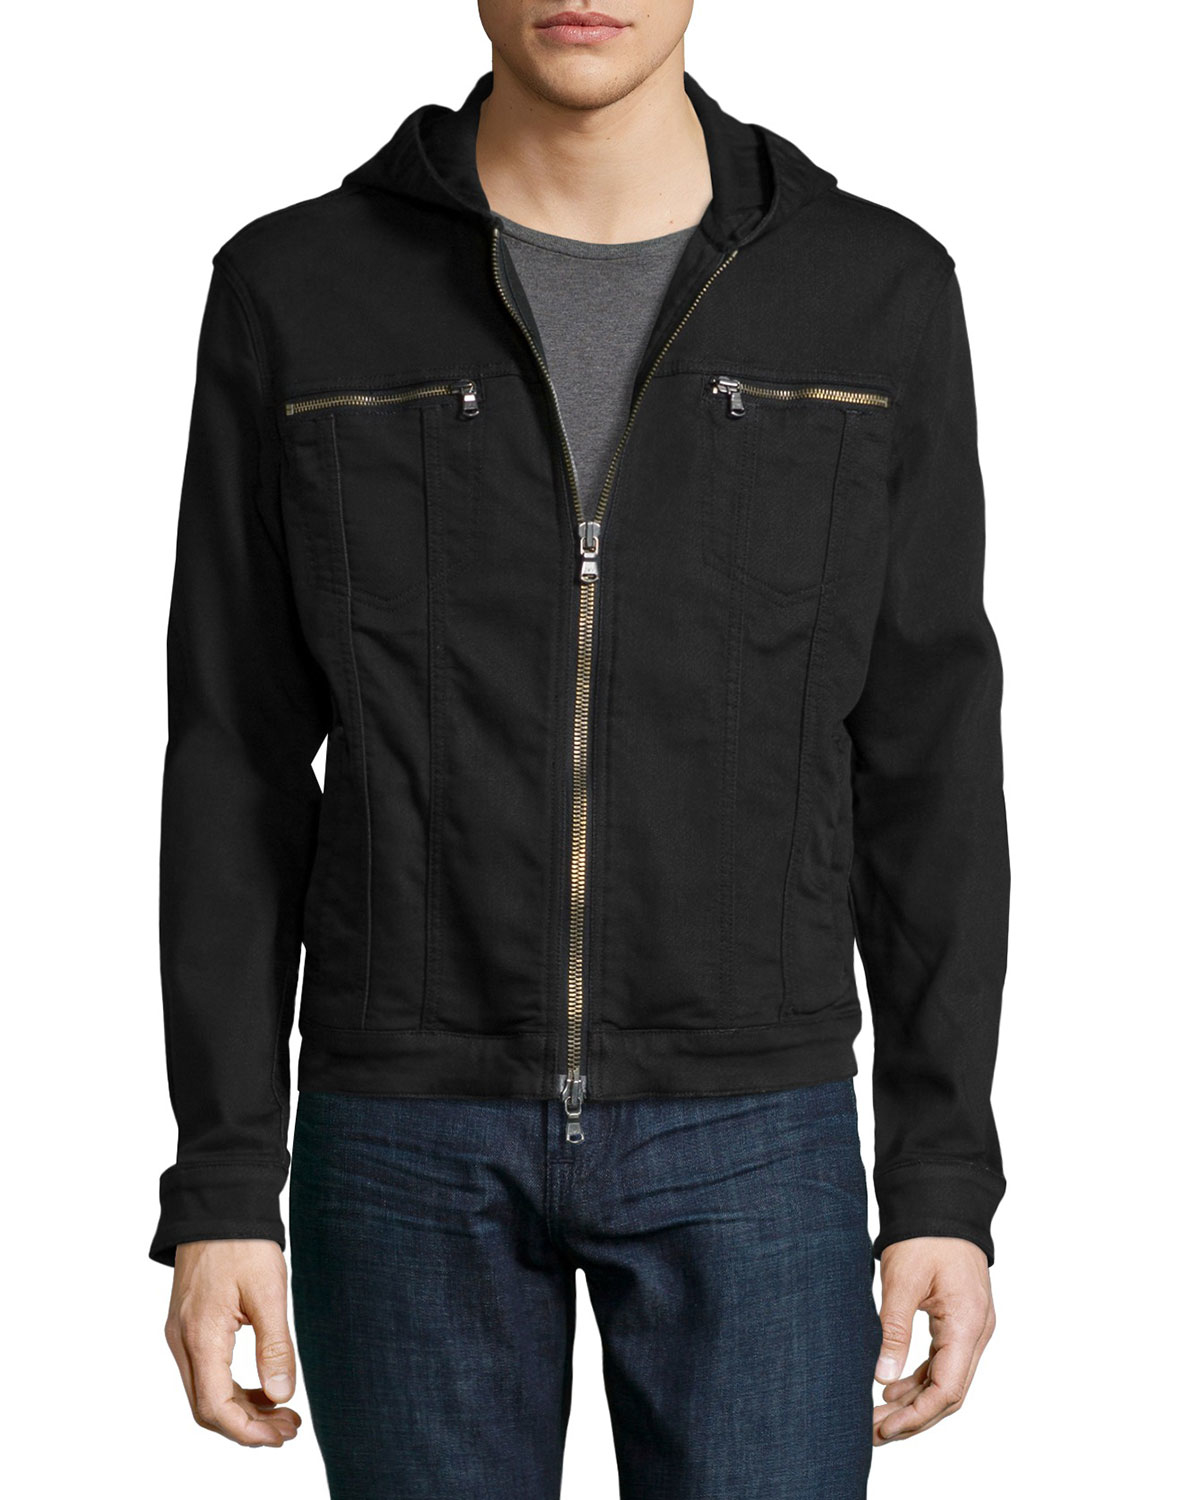 Lyst - John Varvatos Zip-up Hooded Jean Jacket in Black for Men